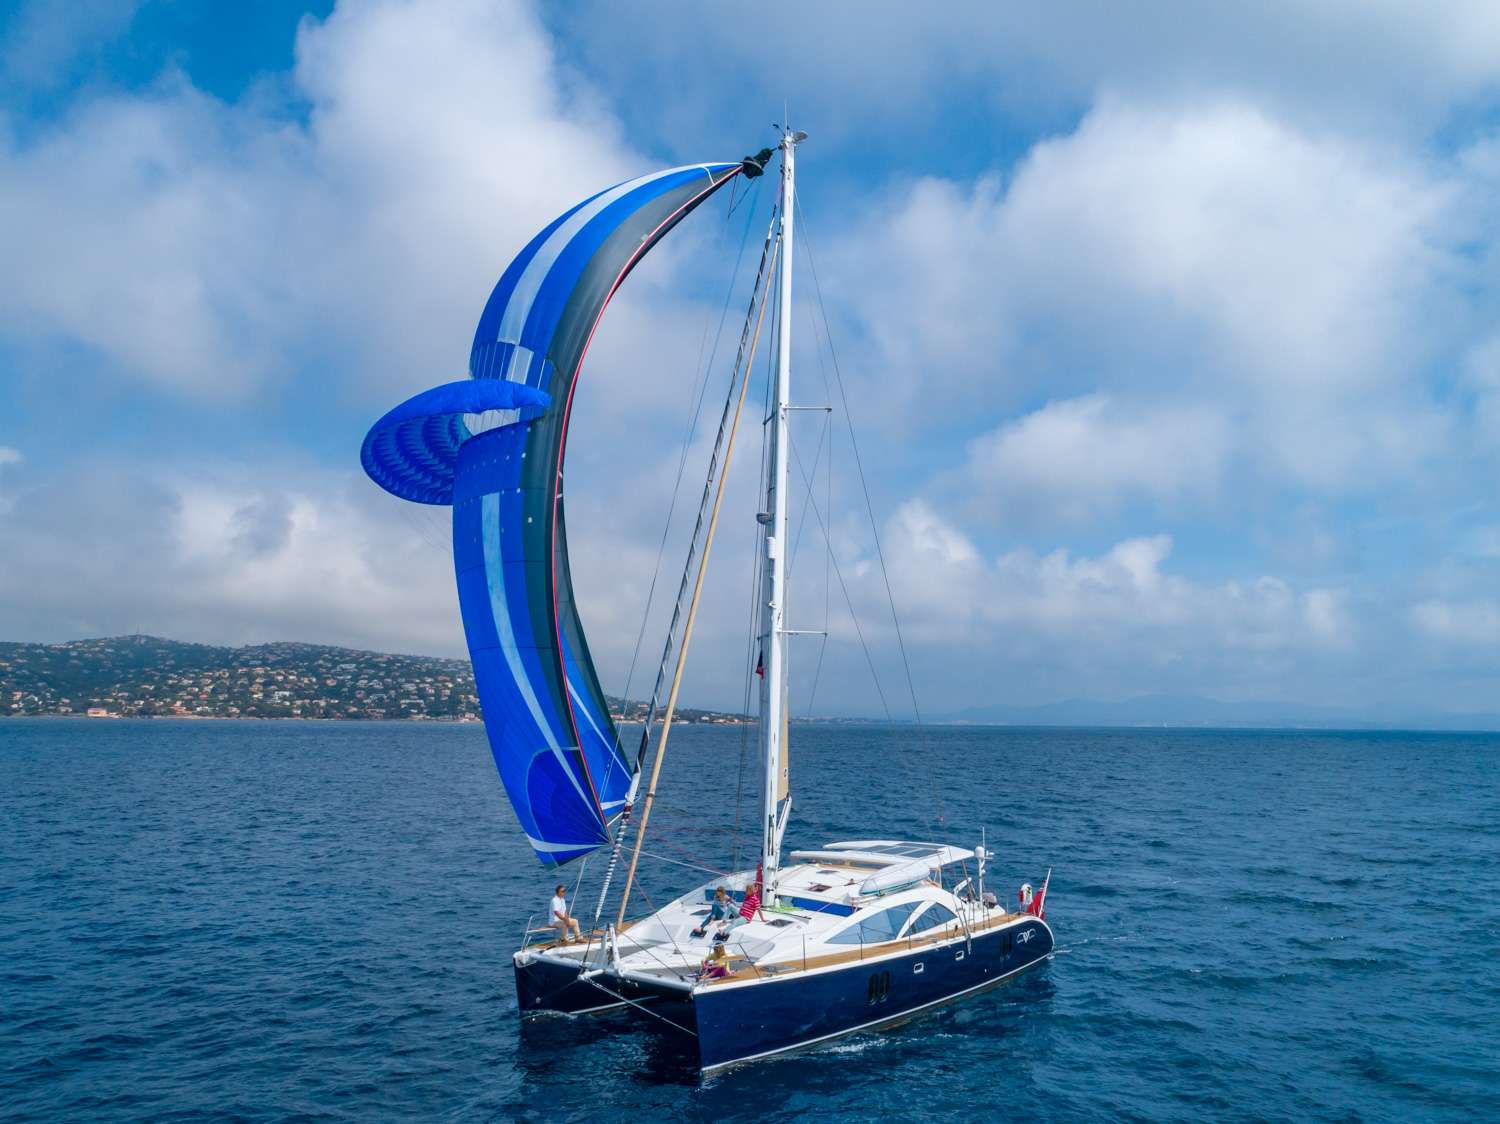 curanta cridhe - Yacht Charter Cannes & Boat hire in Fr. Riviera & Tyrrhenian Sea 1